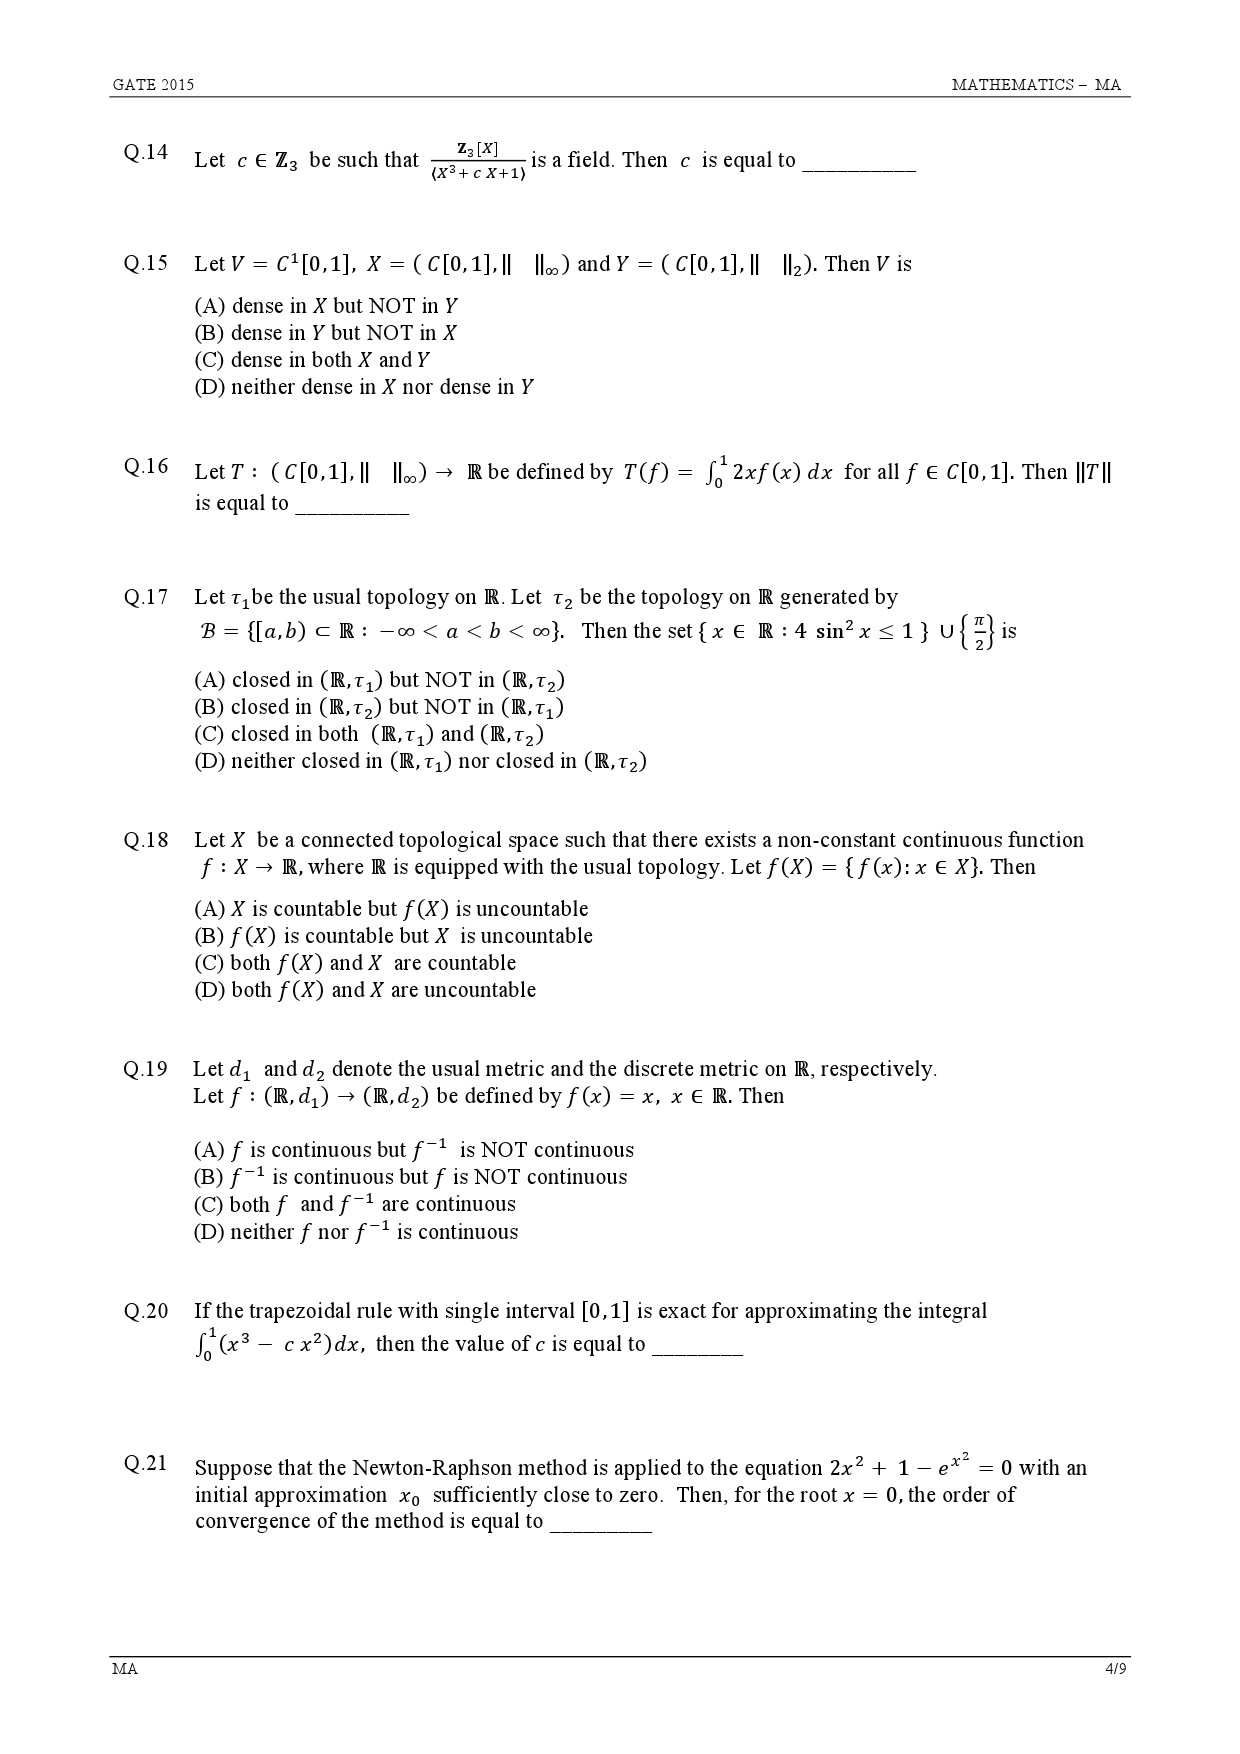 GATE Exam Question Paper 2015 Mathematics 4